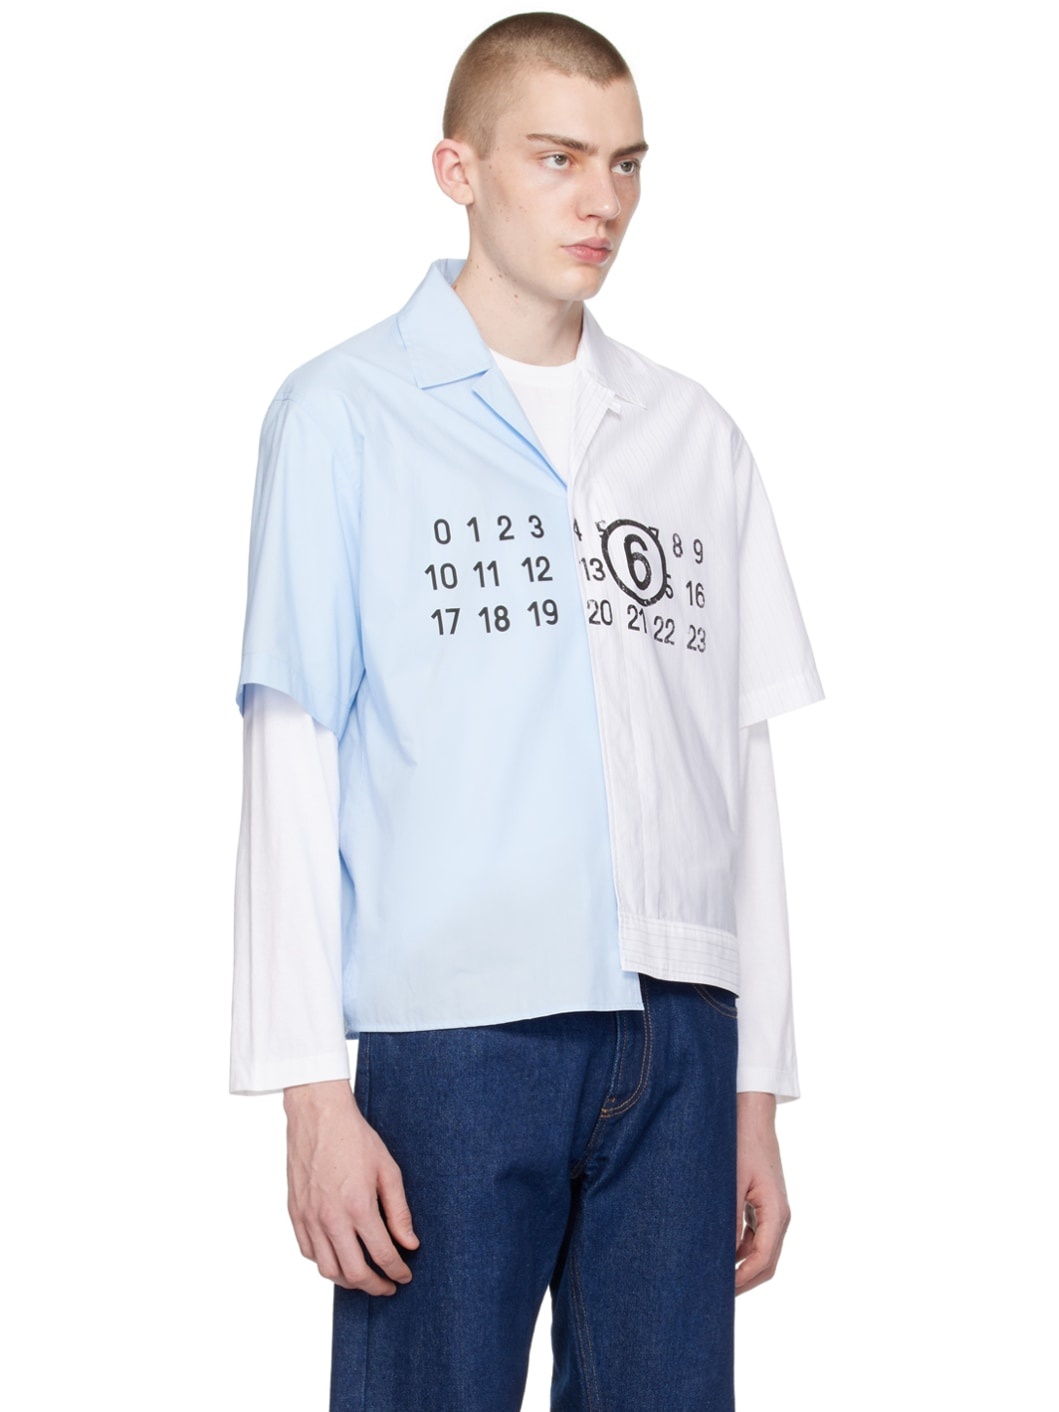 Blue & White Printed Shirt - 2